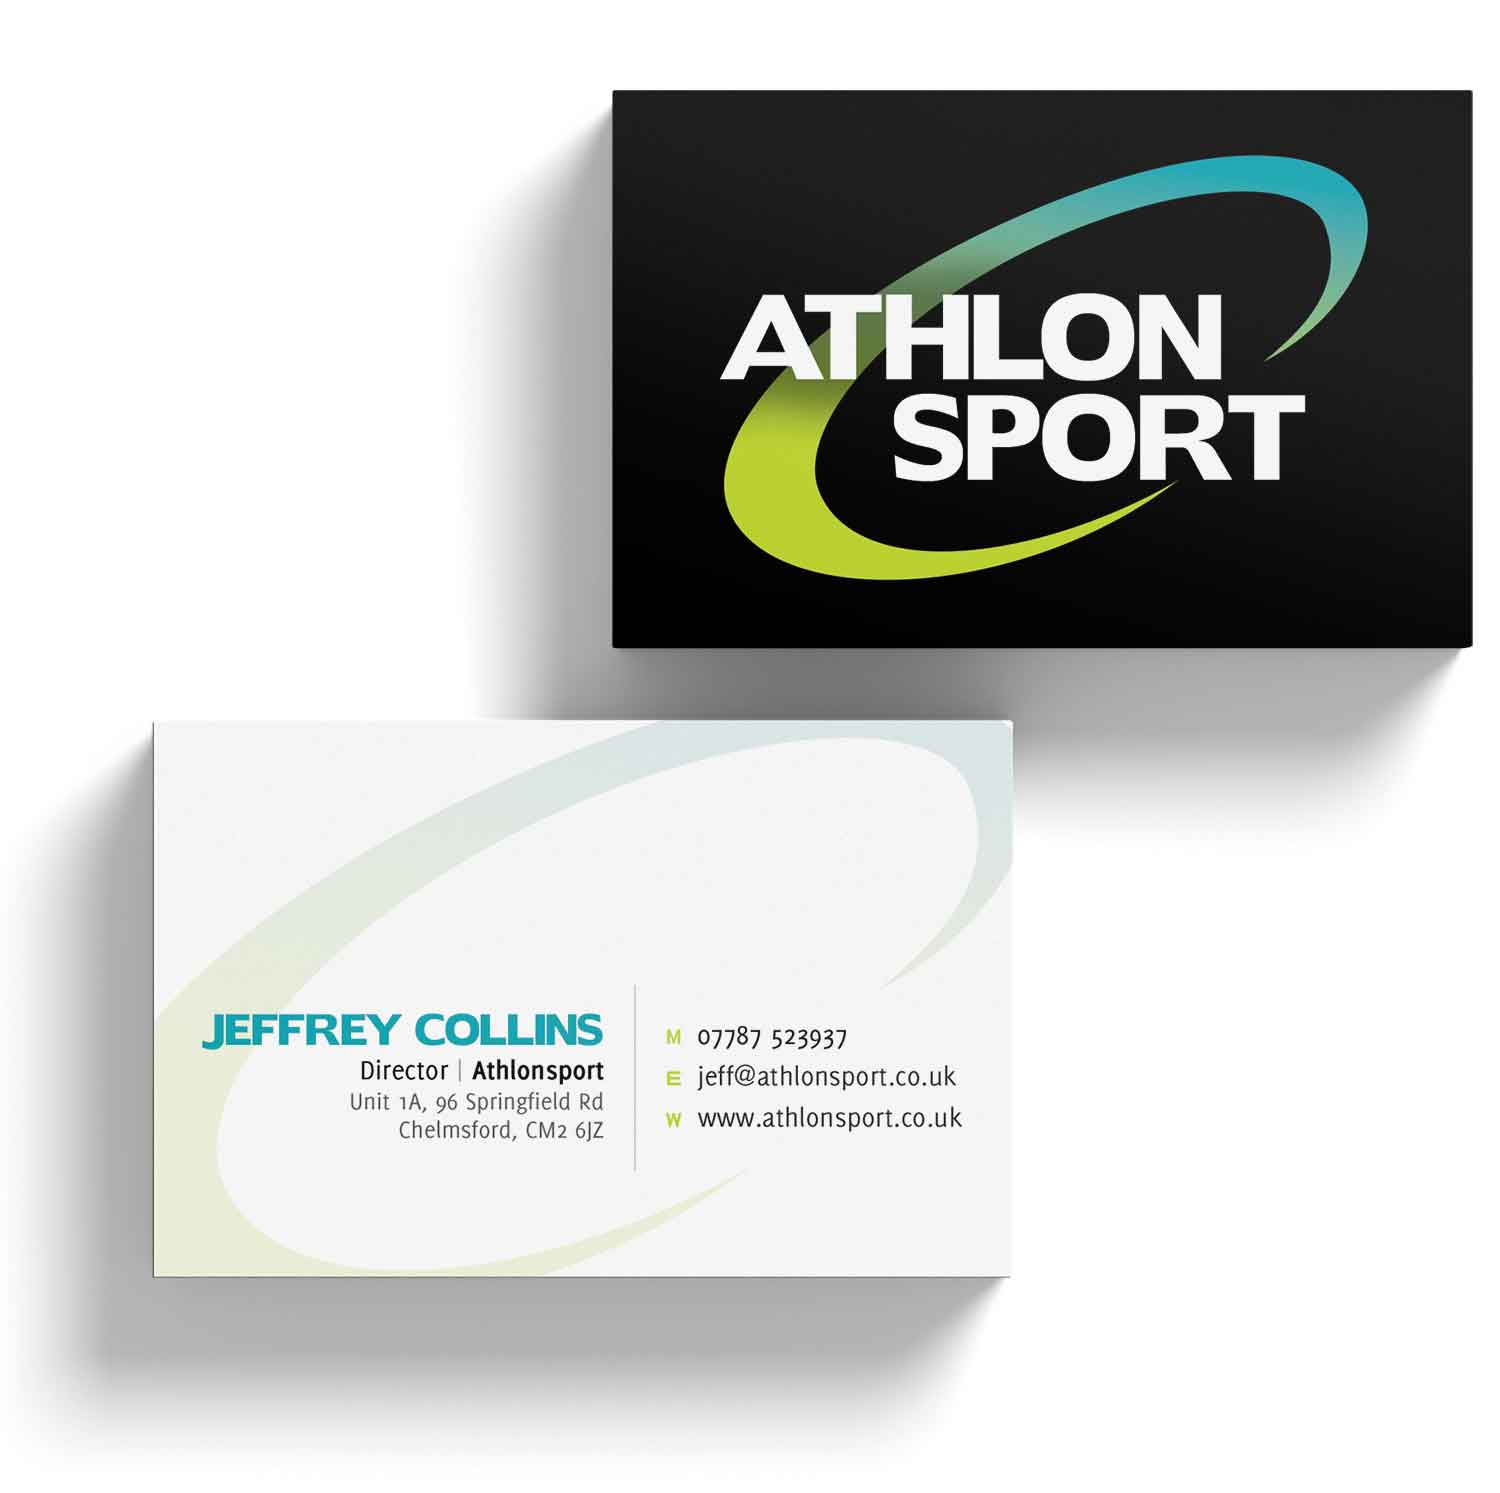 Athlon Sport business card design